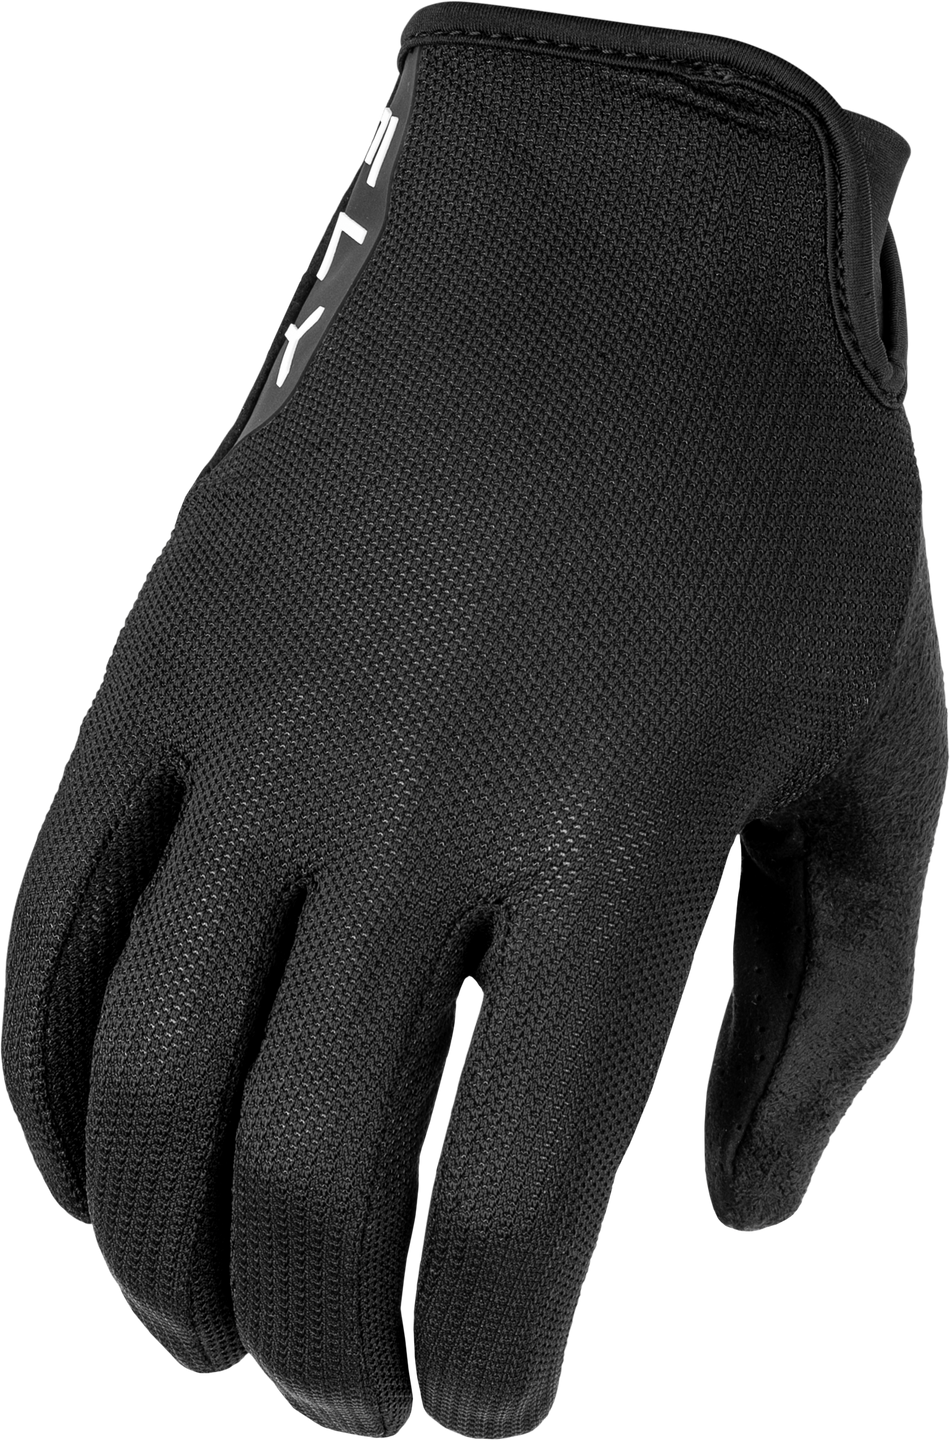 FLY RACING Mesh Gloves Black Sm 375-330S